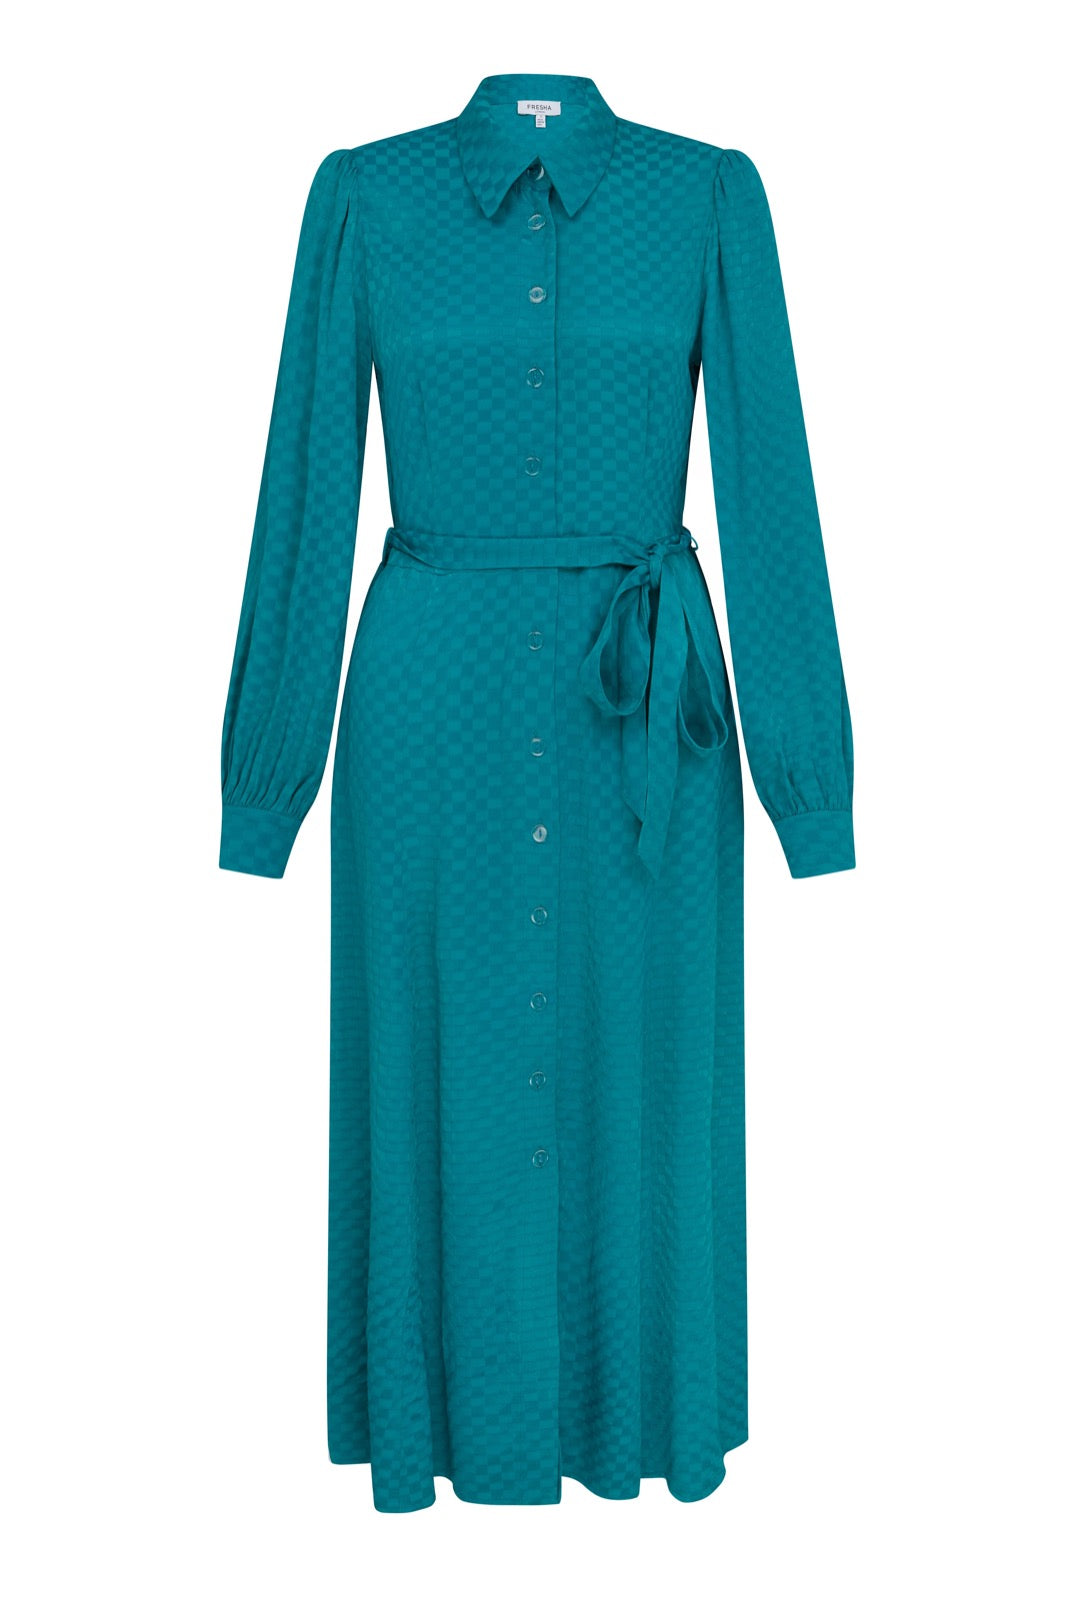 Fresha London Women's Green Maeve Dress Teal Checkerboard In Blue